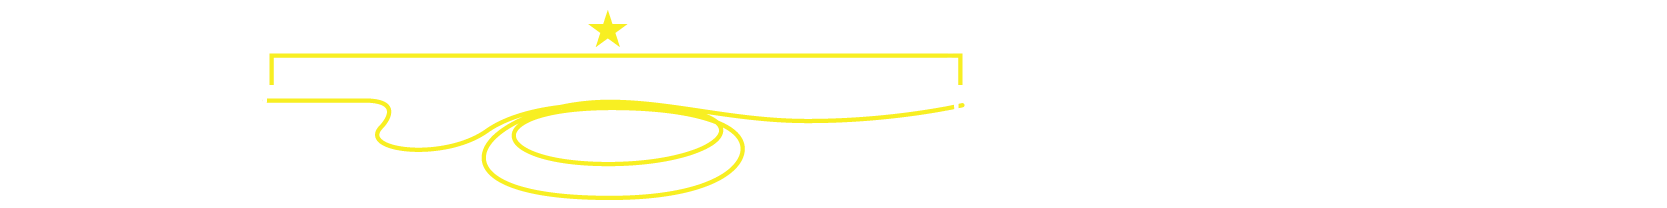 External cable length